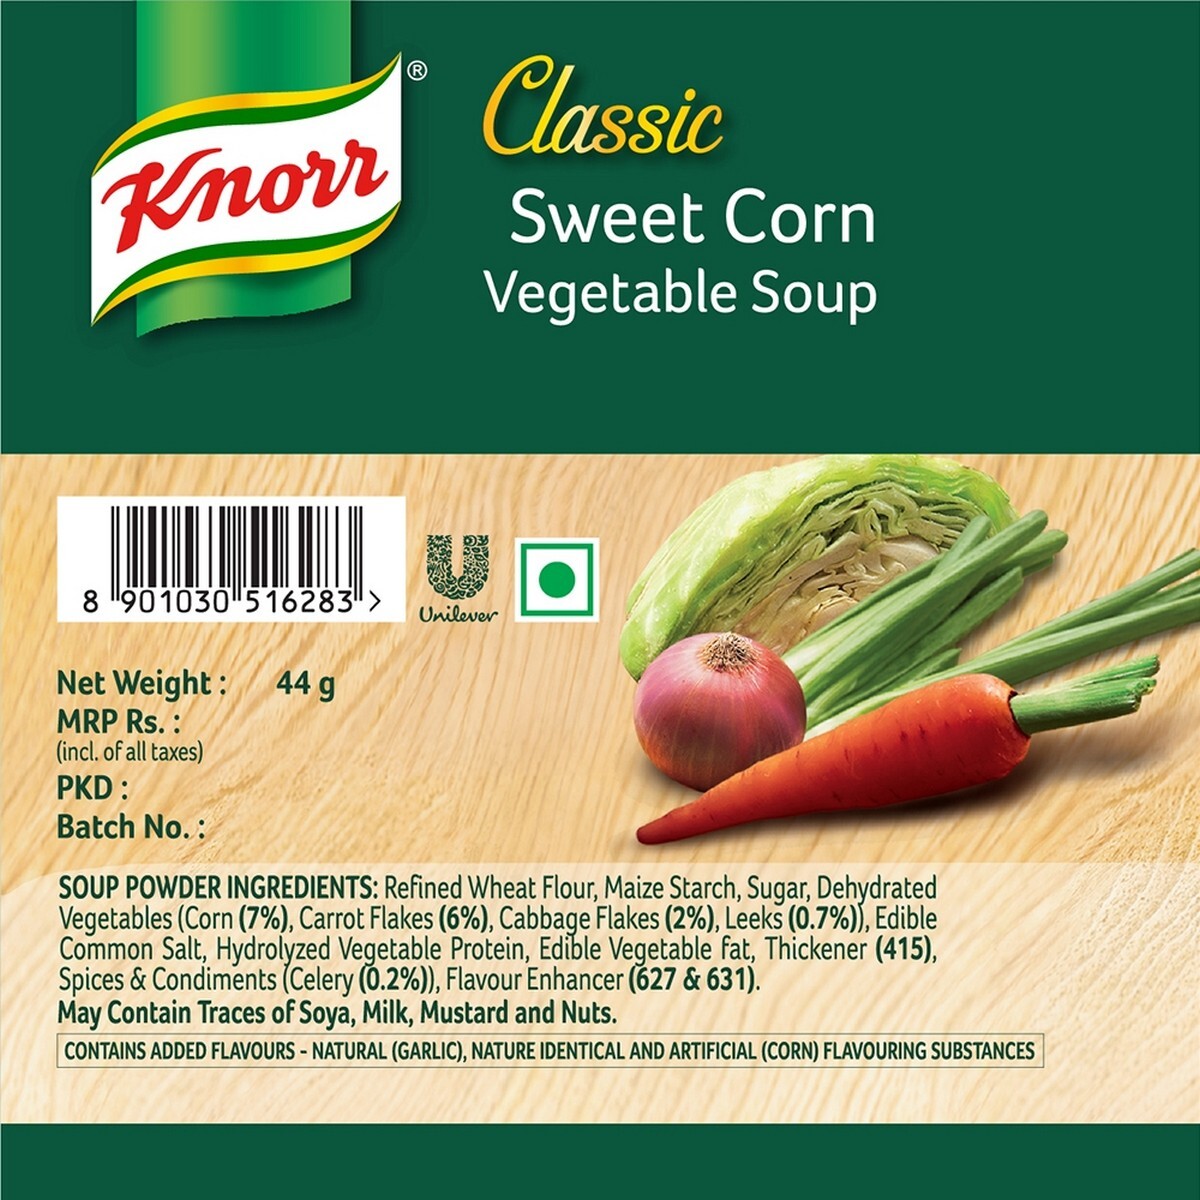 Knorr Chinese Sweet Corn Veg Soup 42G